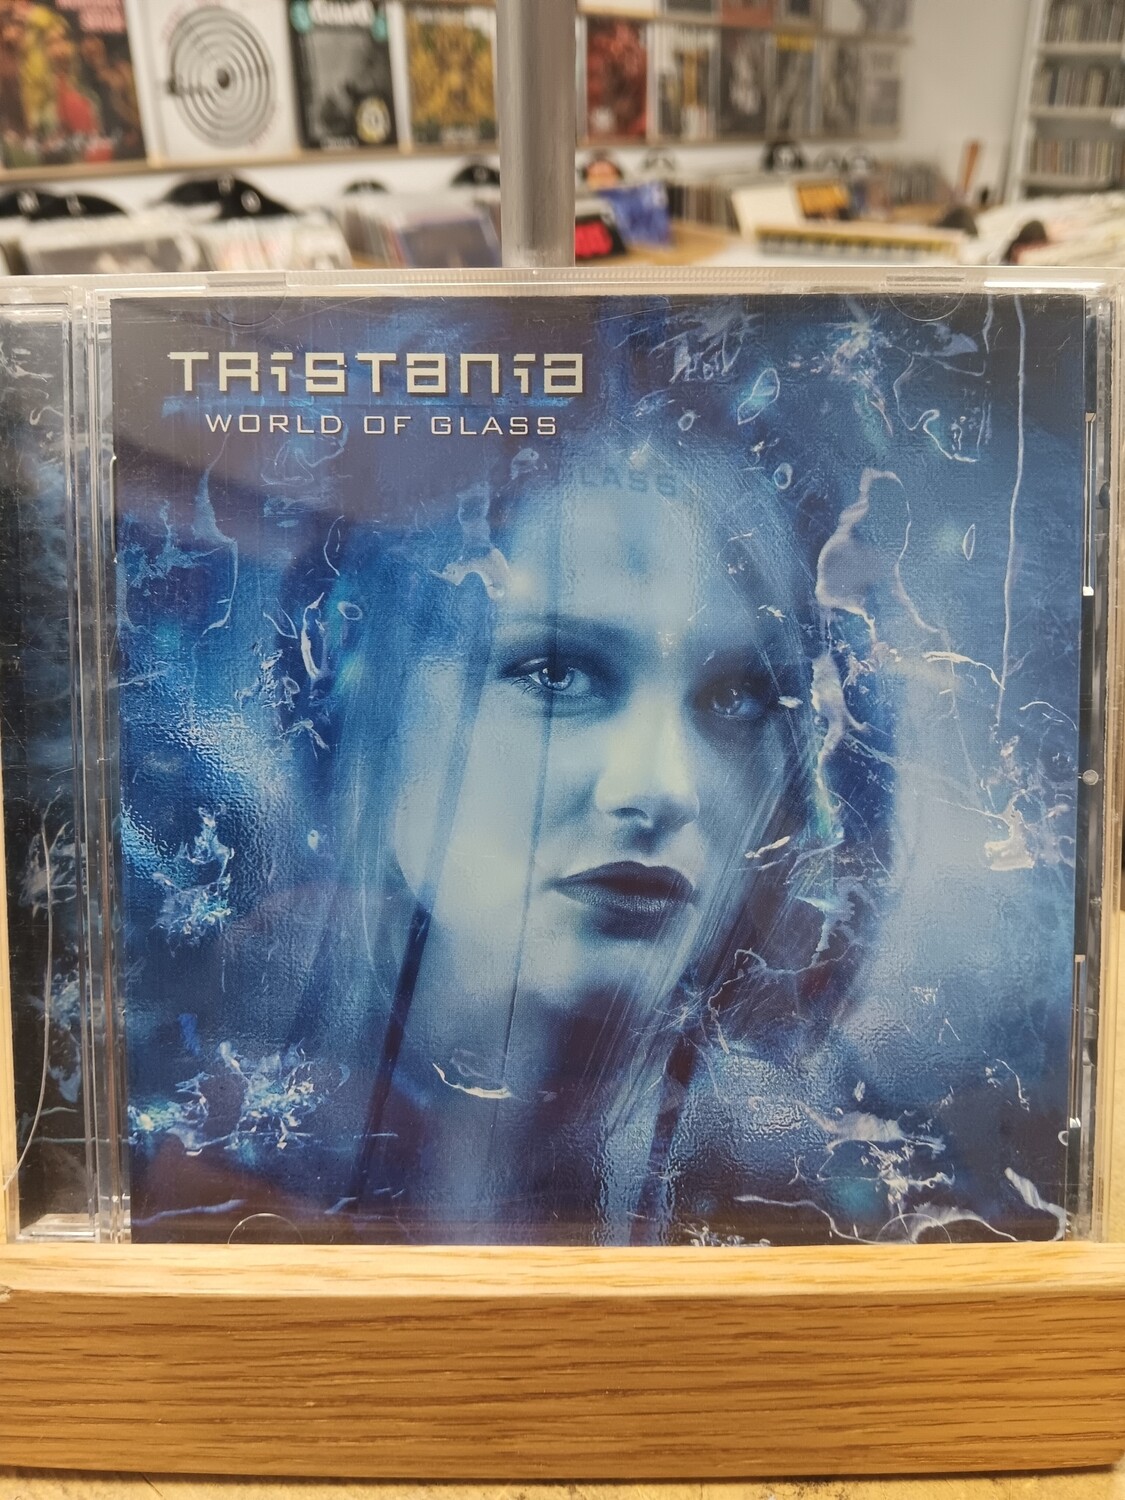 TRISTANIA - World of glass (CD)